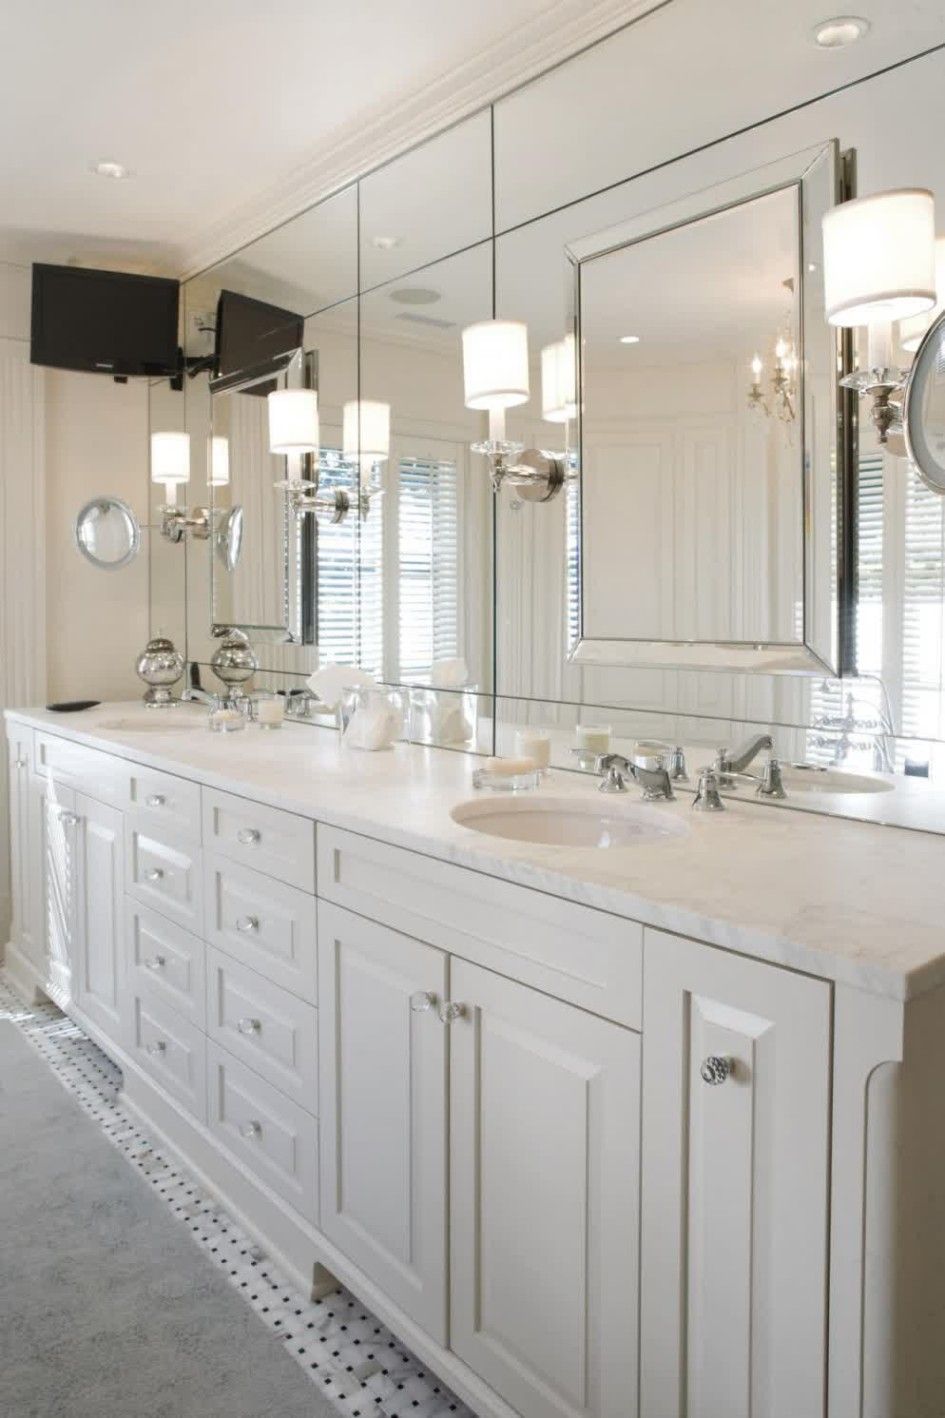 Bathroom Ideas, Modern Bathroom Wall Sconces With Large Frameless Mirror  Above Double Sink Bathroom Vanity Under Recessed Lights: Selecting Sweet  Bathroom